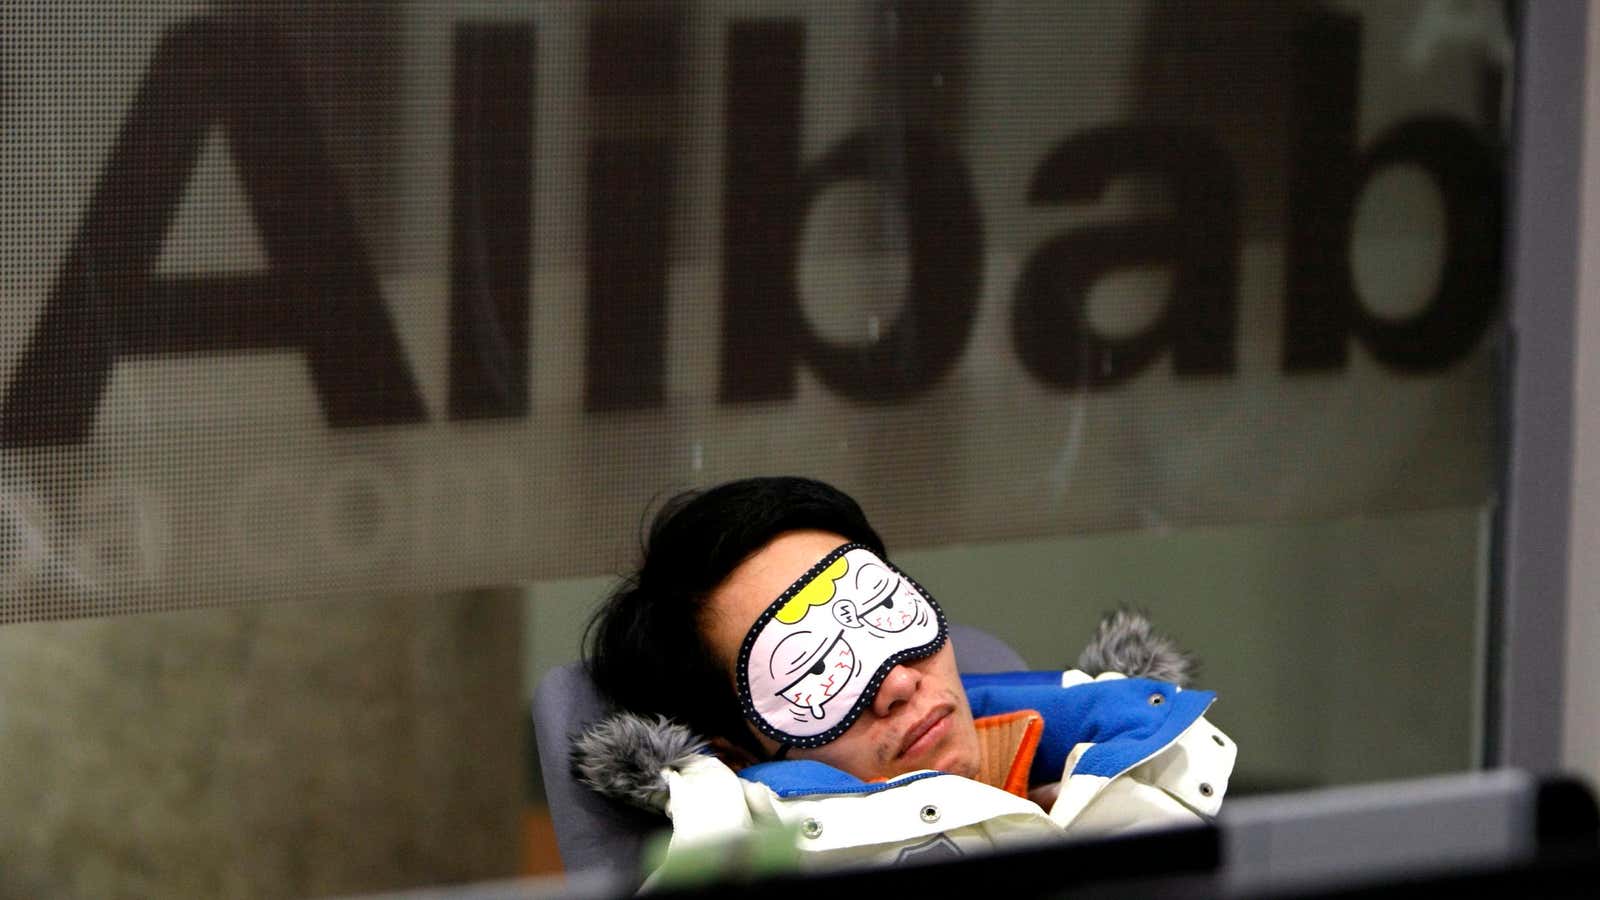 Is Alibaba’s due diligence team  sleeping on the job?